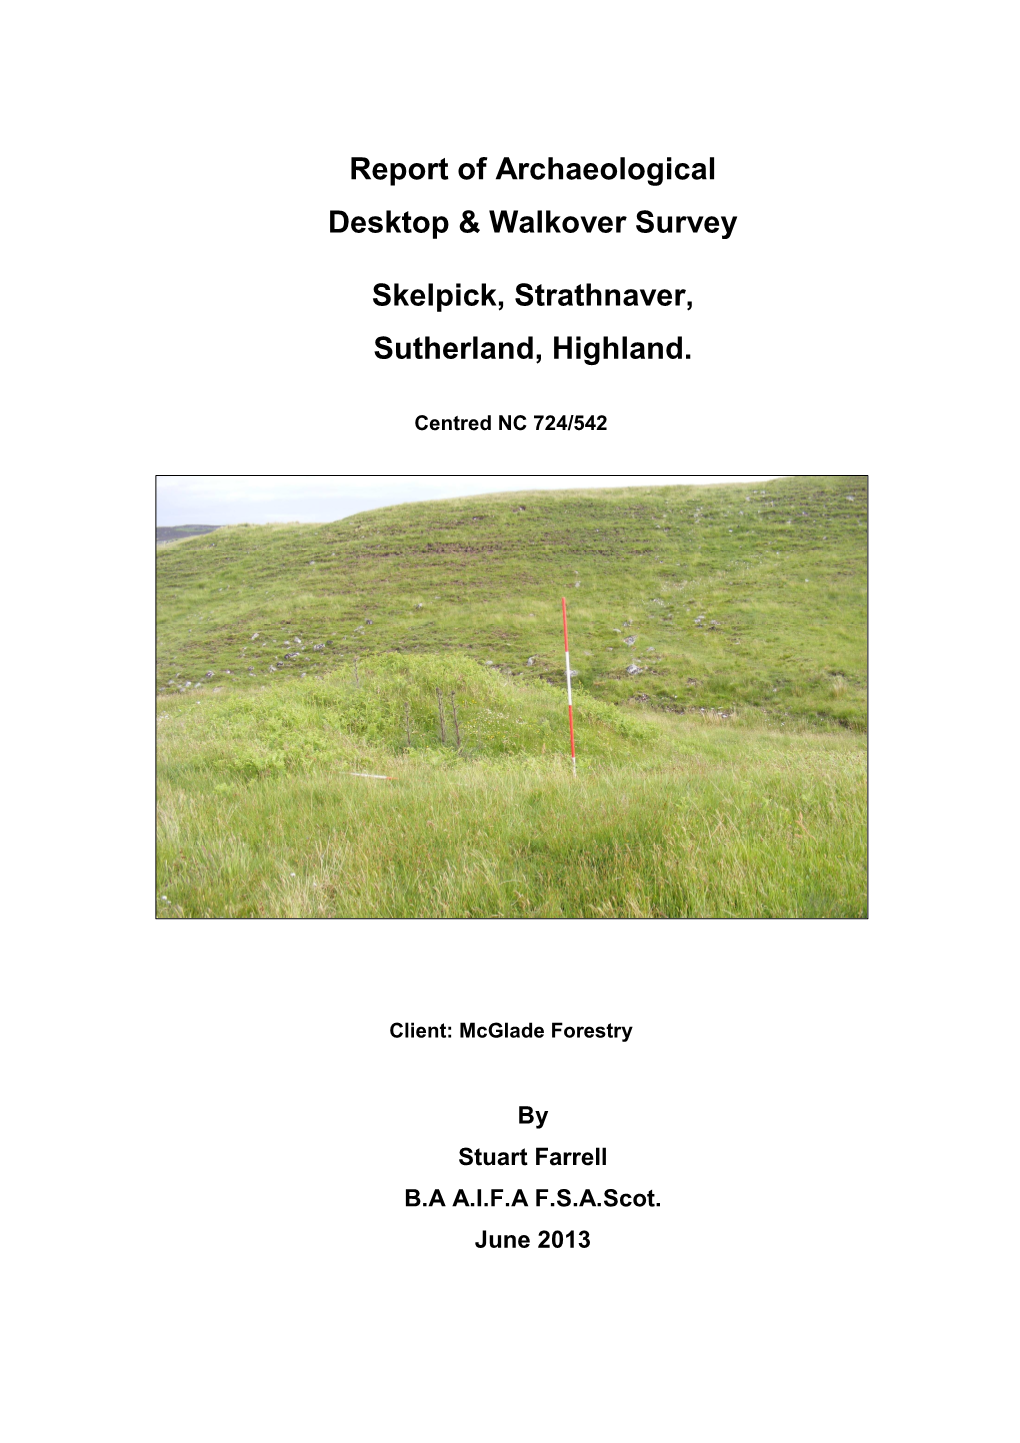 Report of Archaeological Desktop & Walkover